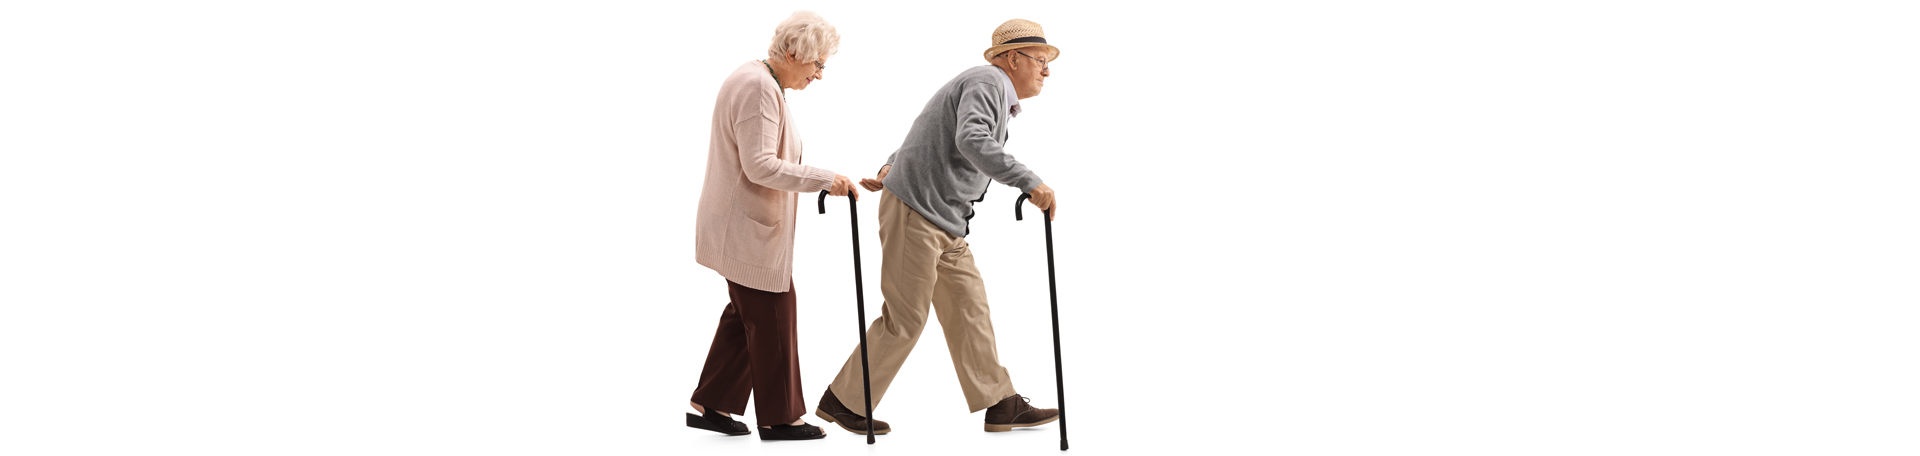 Richmond back pain affects gait and walking patterns